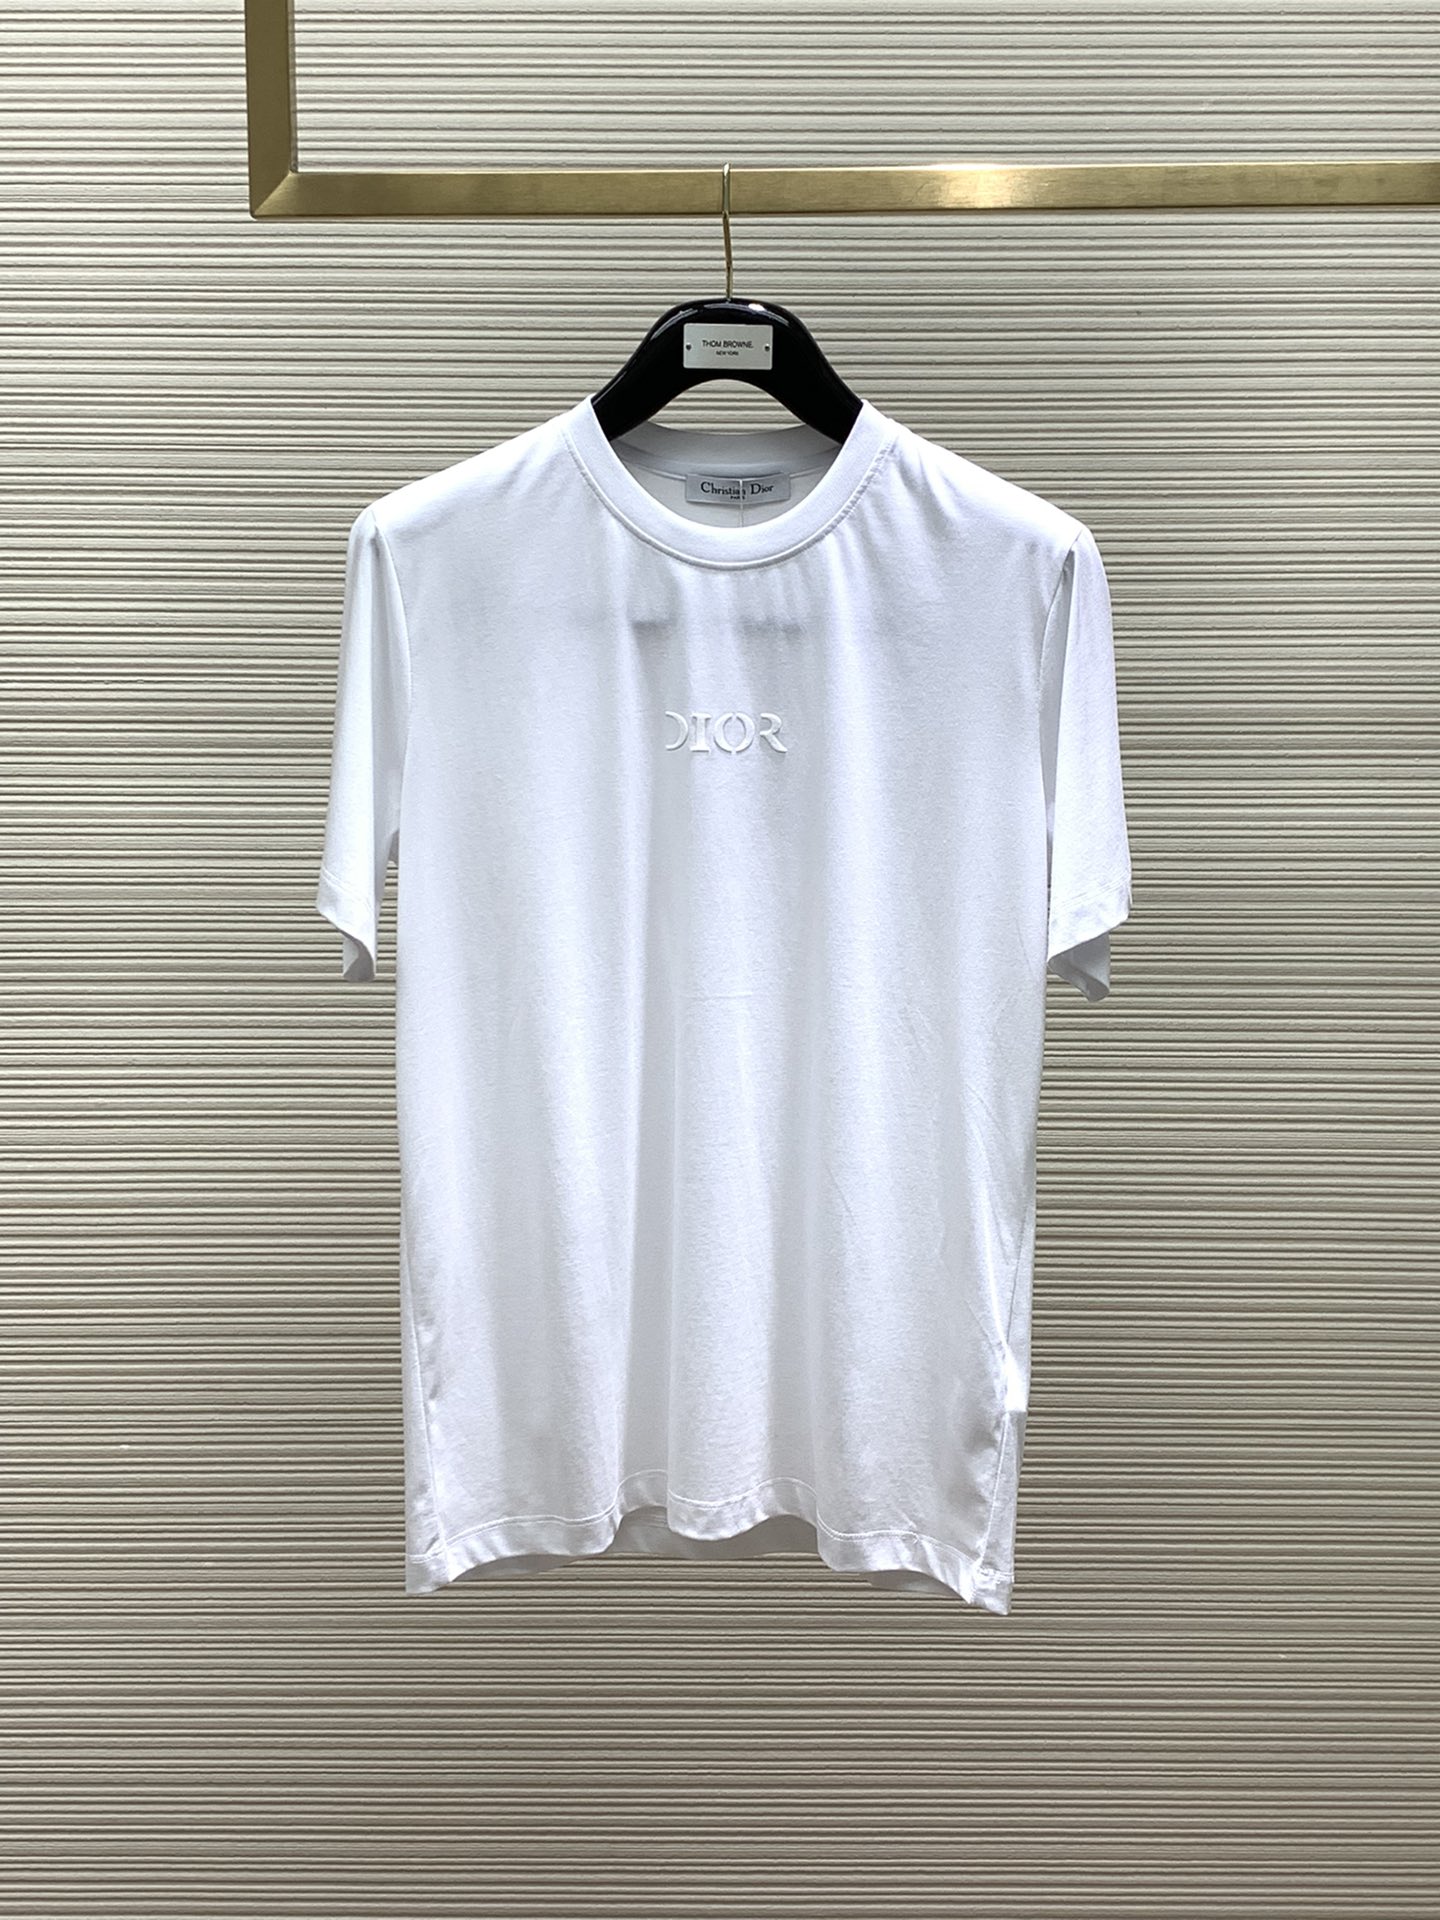 Dior Clothing T-Shirt Printing Summer Collection Fashion Short Sleeve